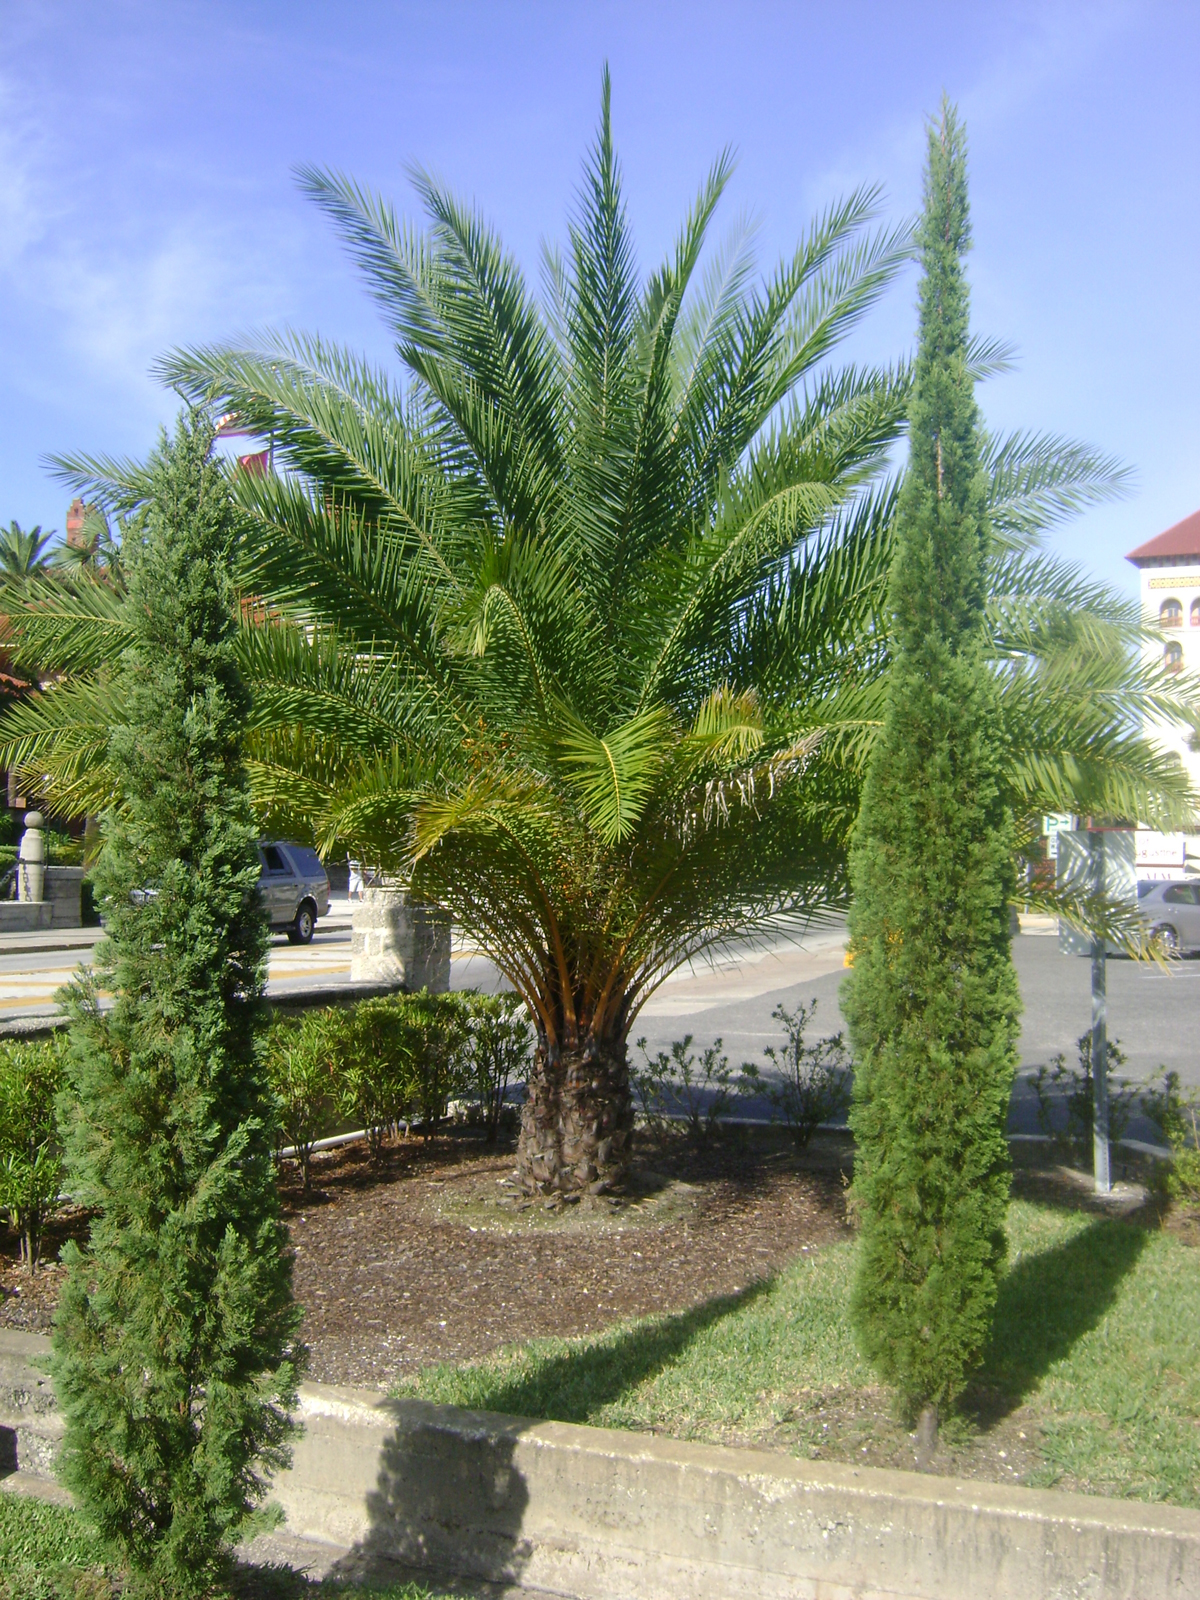 Italian Cypress Surrounding a Palm